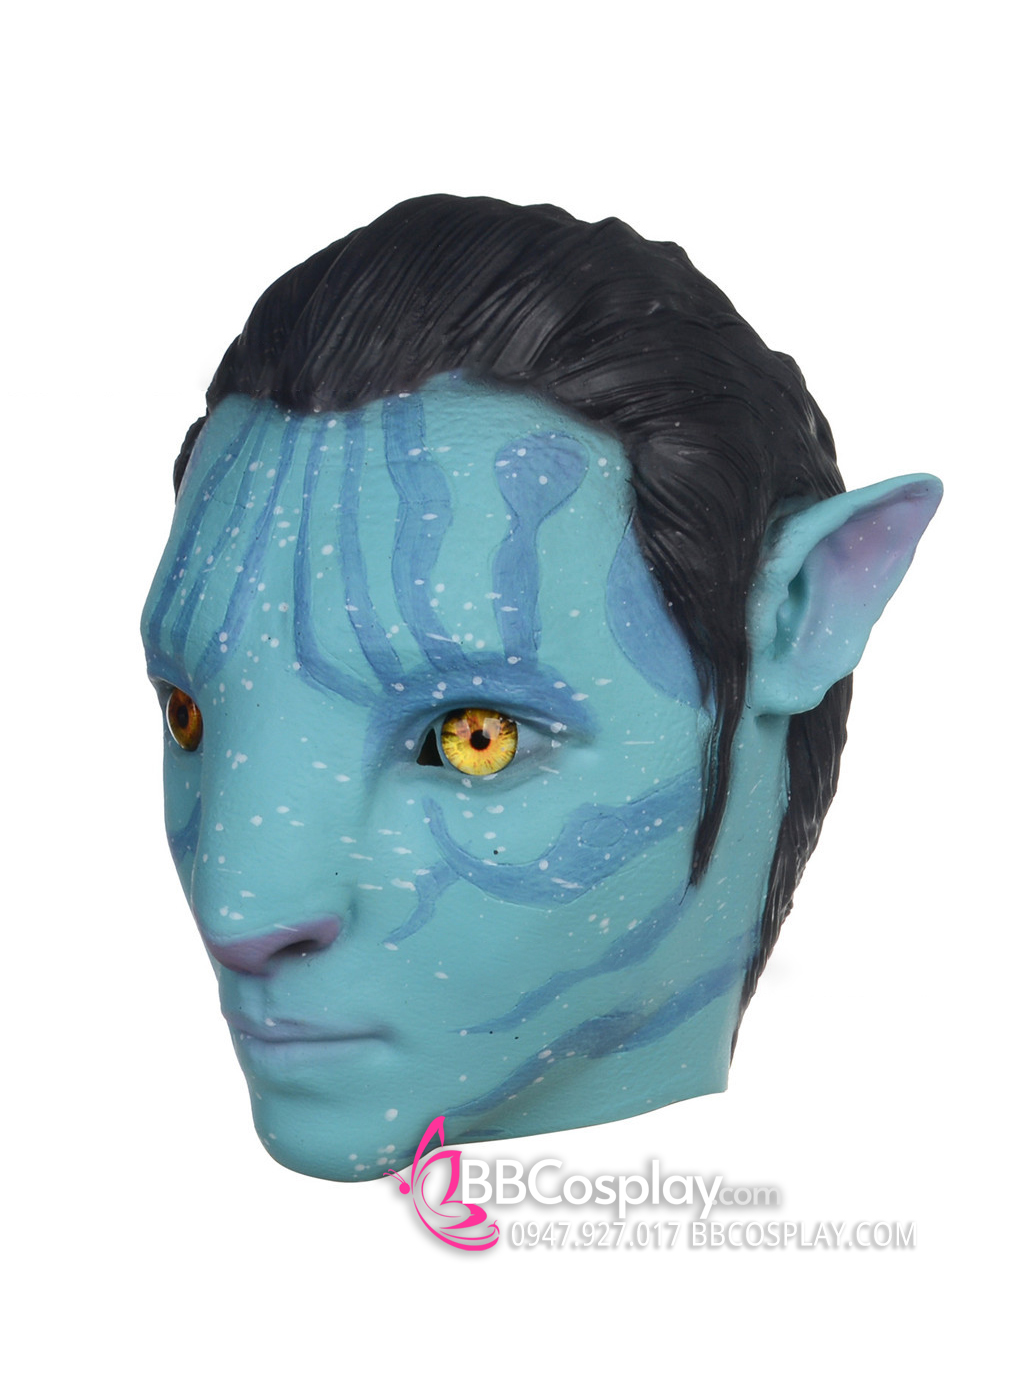 Neytiri Face Mask Avatar 2 The Way of Water Costume  EasyCosplayCostumes